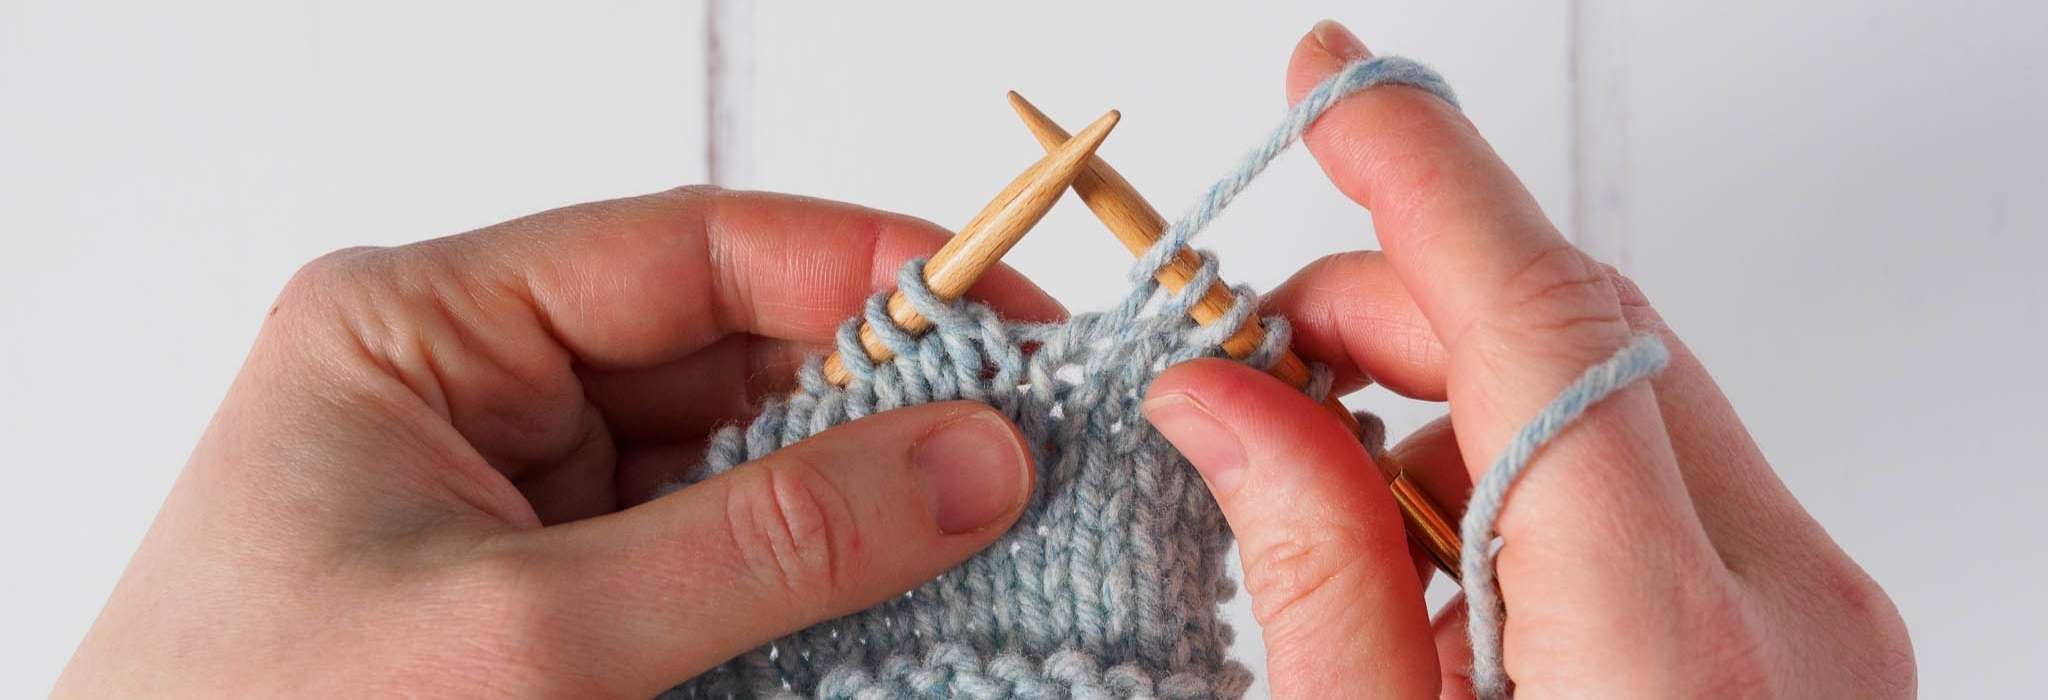 Learn to Knit: Yarn Over - Ysolda